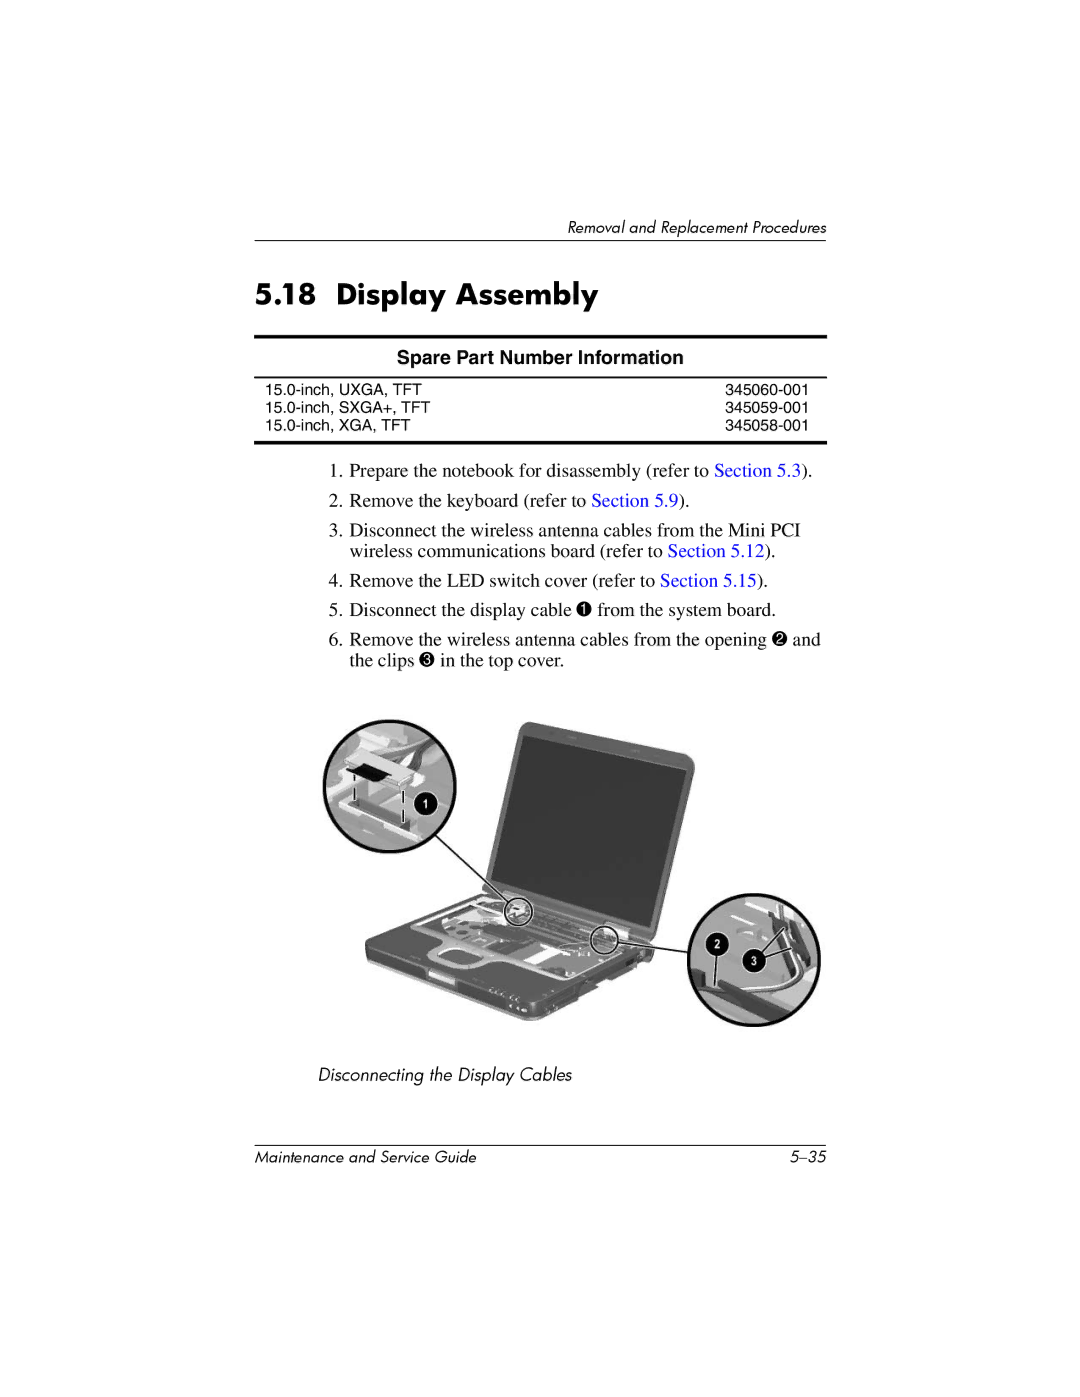 HP nw8000 manual Display Assembly 